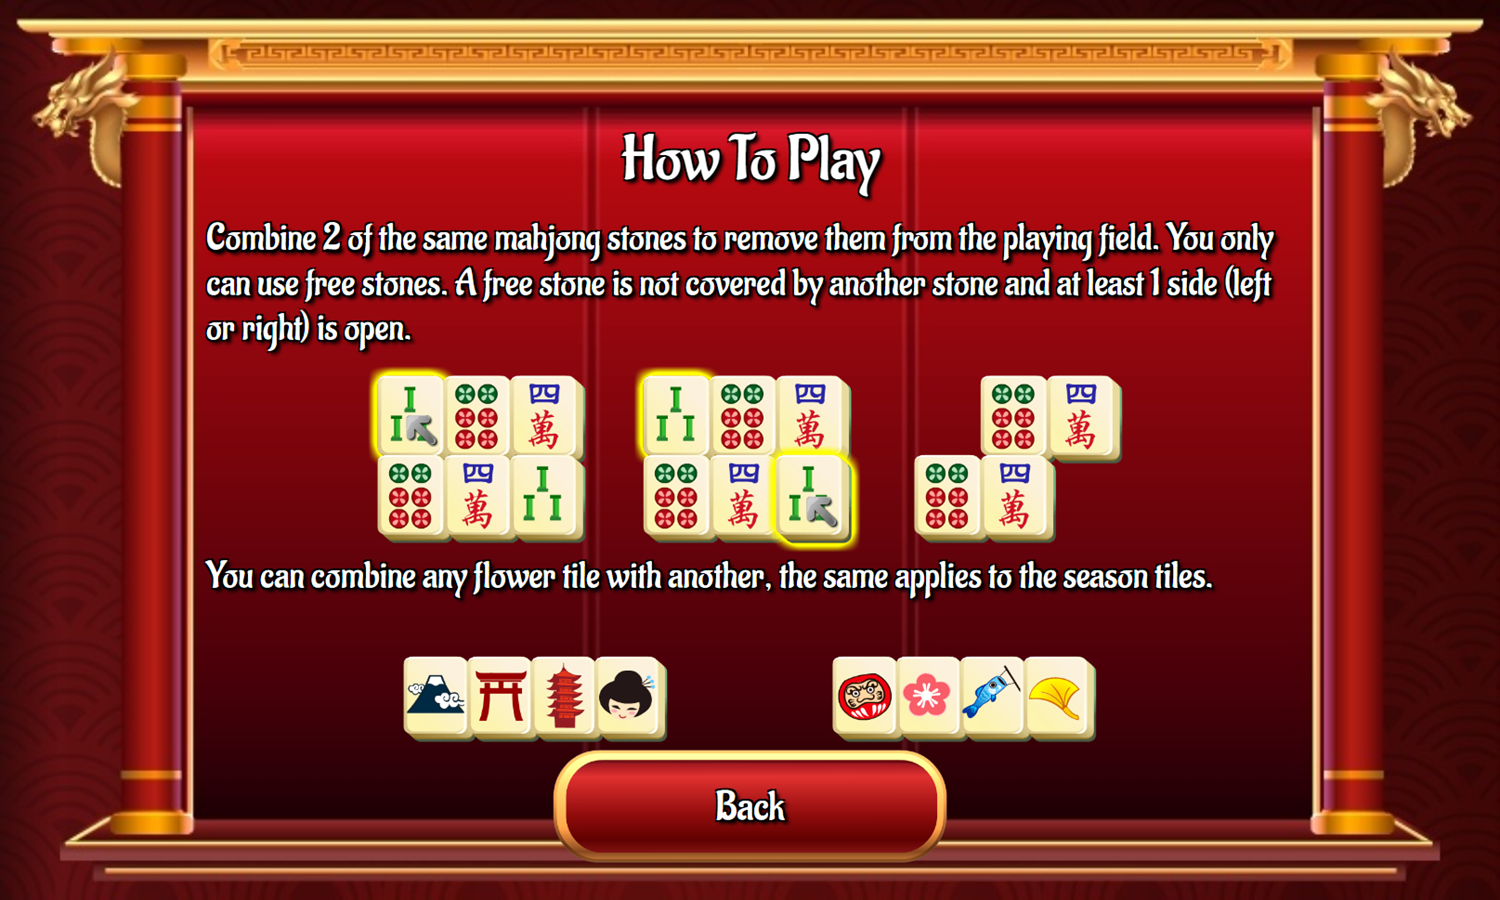 Original Mahjongg Game How To Play Screenshot.